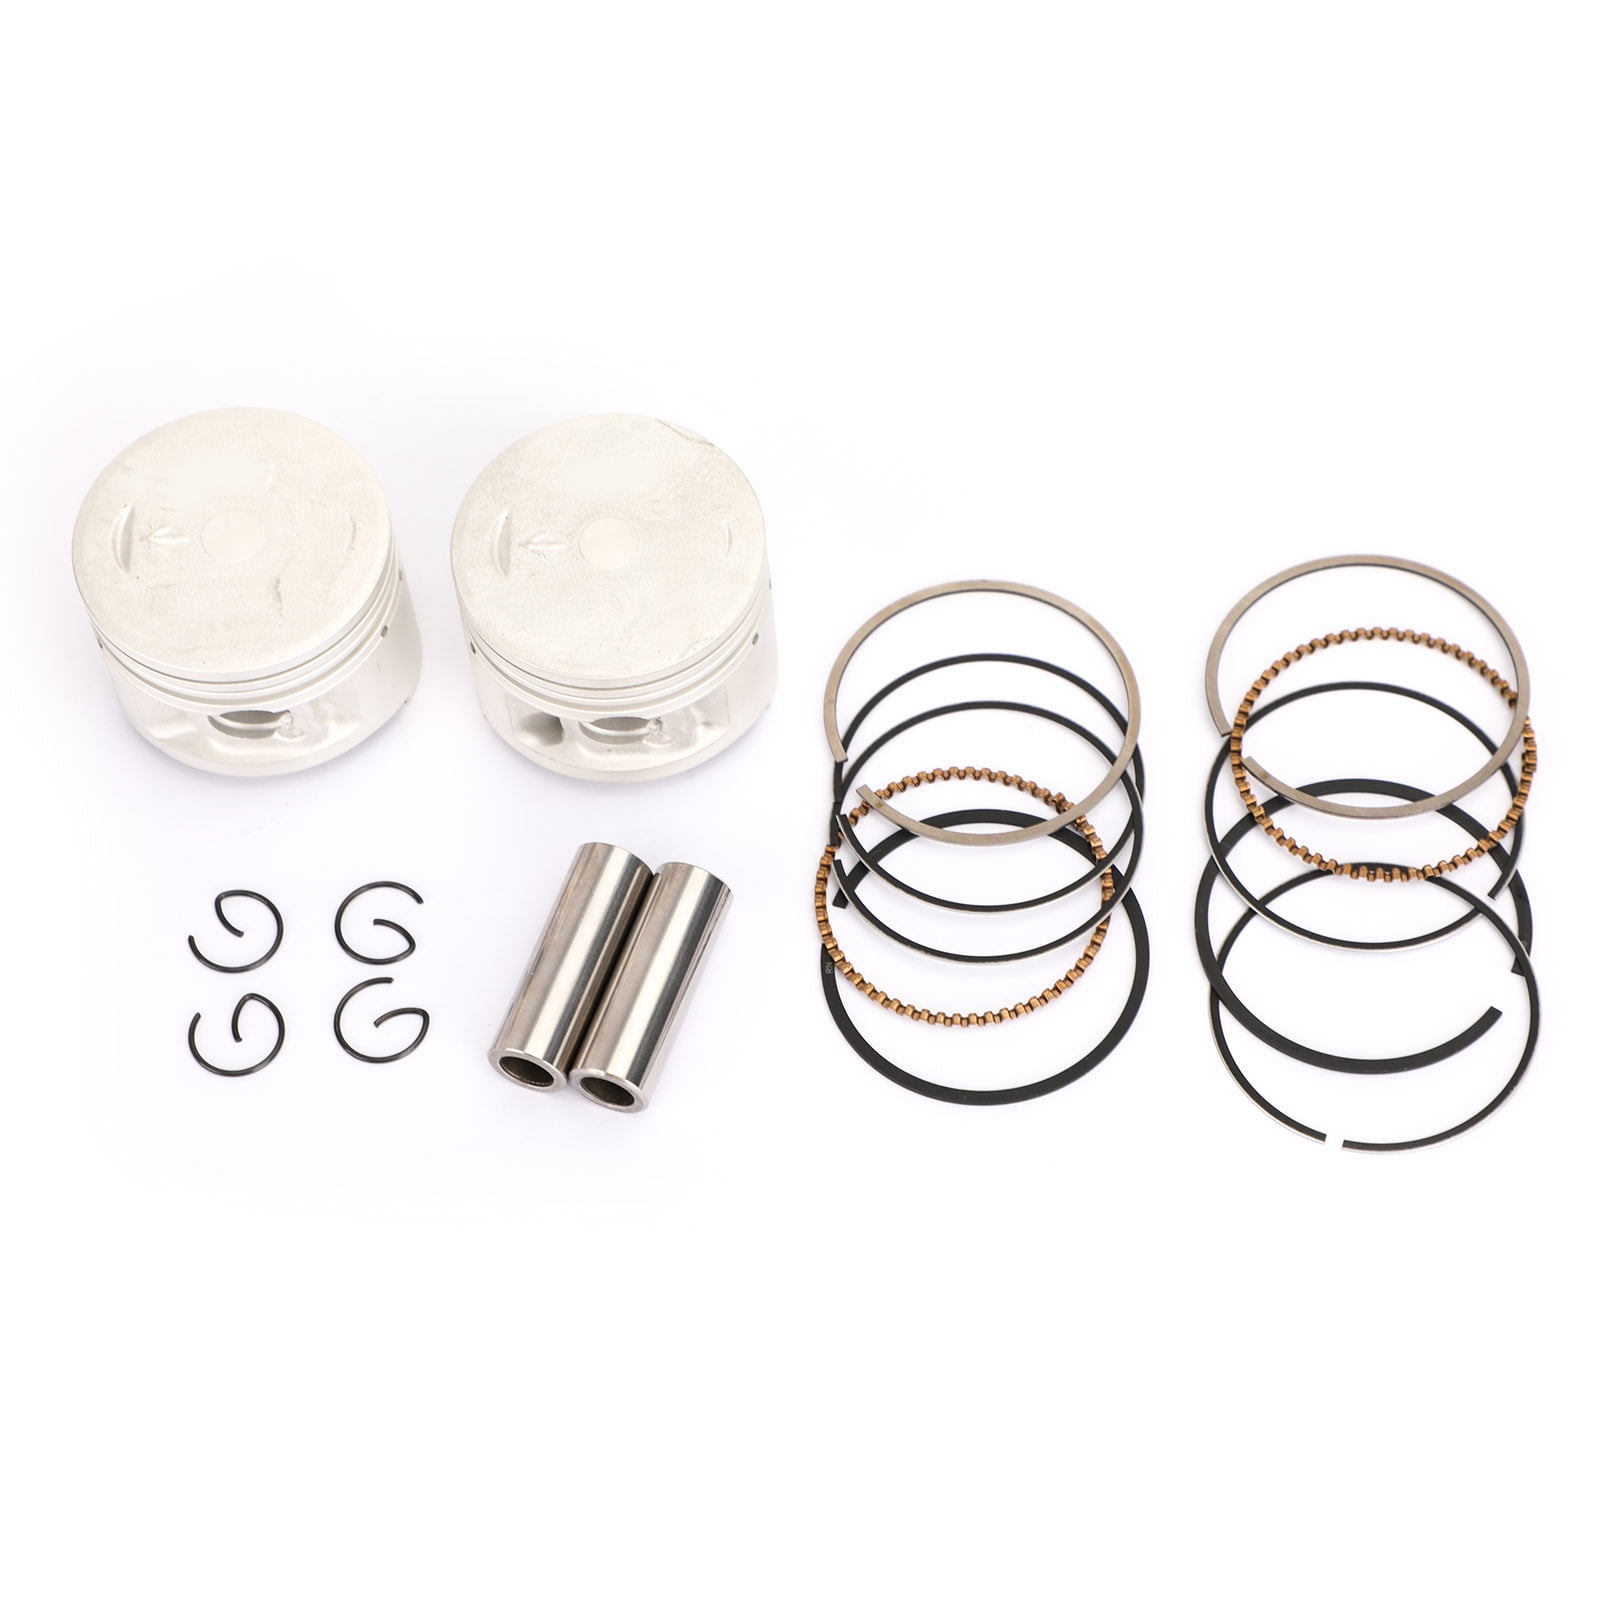 Piston Ring Pin Needle Cage Kit For Jonsered 2055 2054 W Turbo (46mm)  #503608171 | eBay